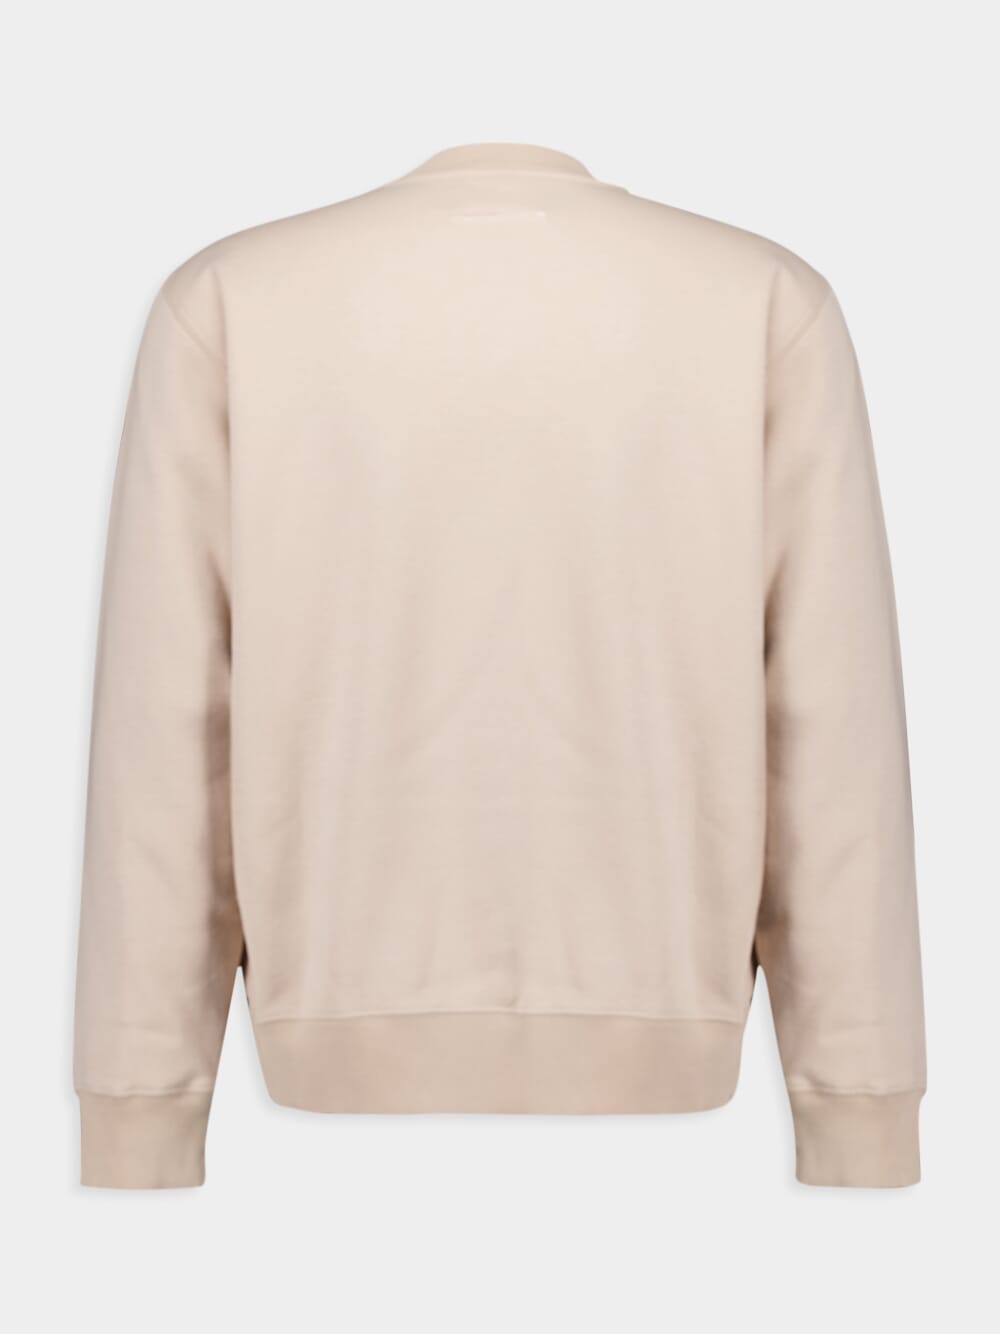 MM6 Maison MargielaNumbers Motif Cotton Blend Sweatshirt at Fashion Clinic